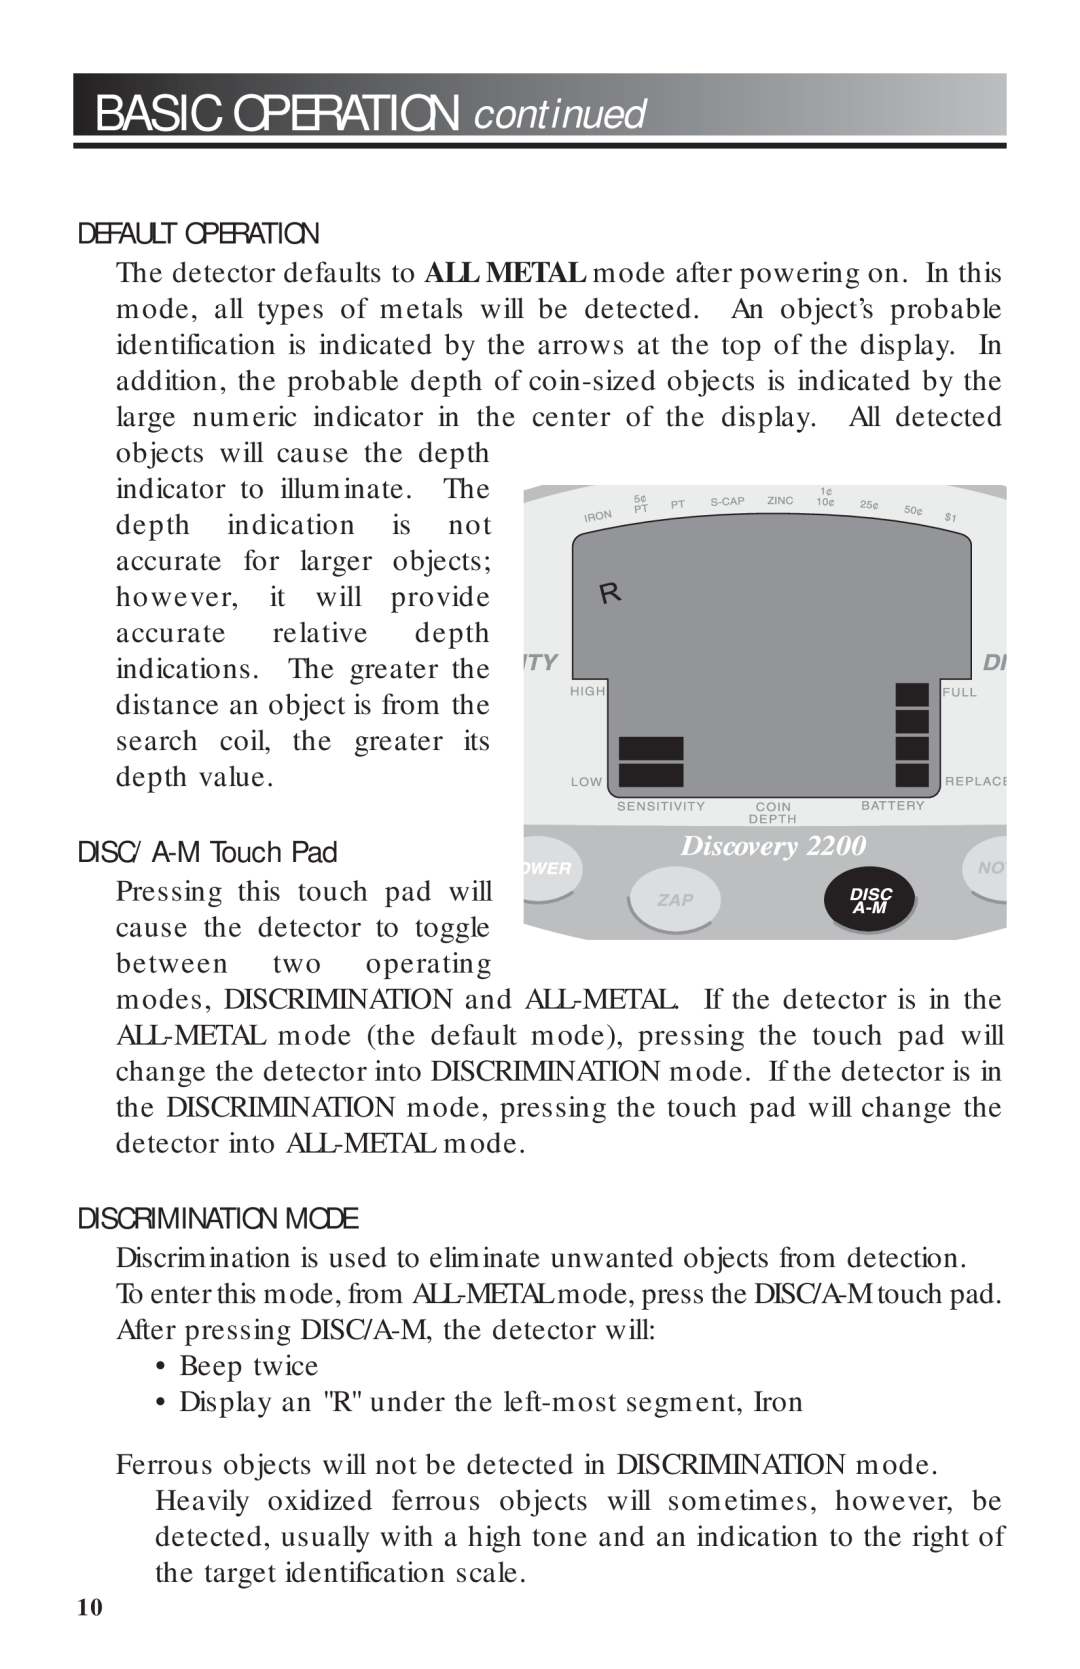 Bounty Hunter 2200 owner manual continued, Default Operation, Discrimination Mode, Basicoperation 